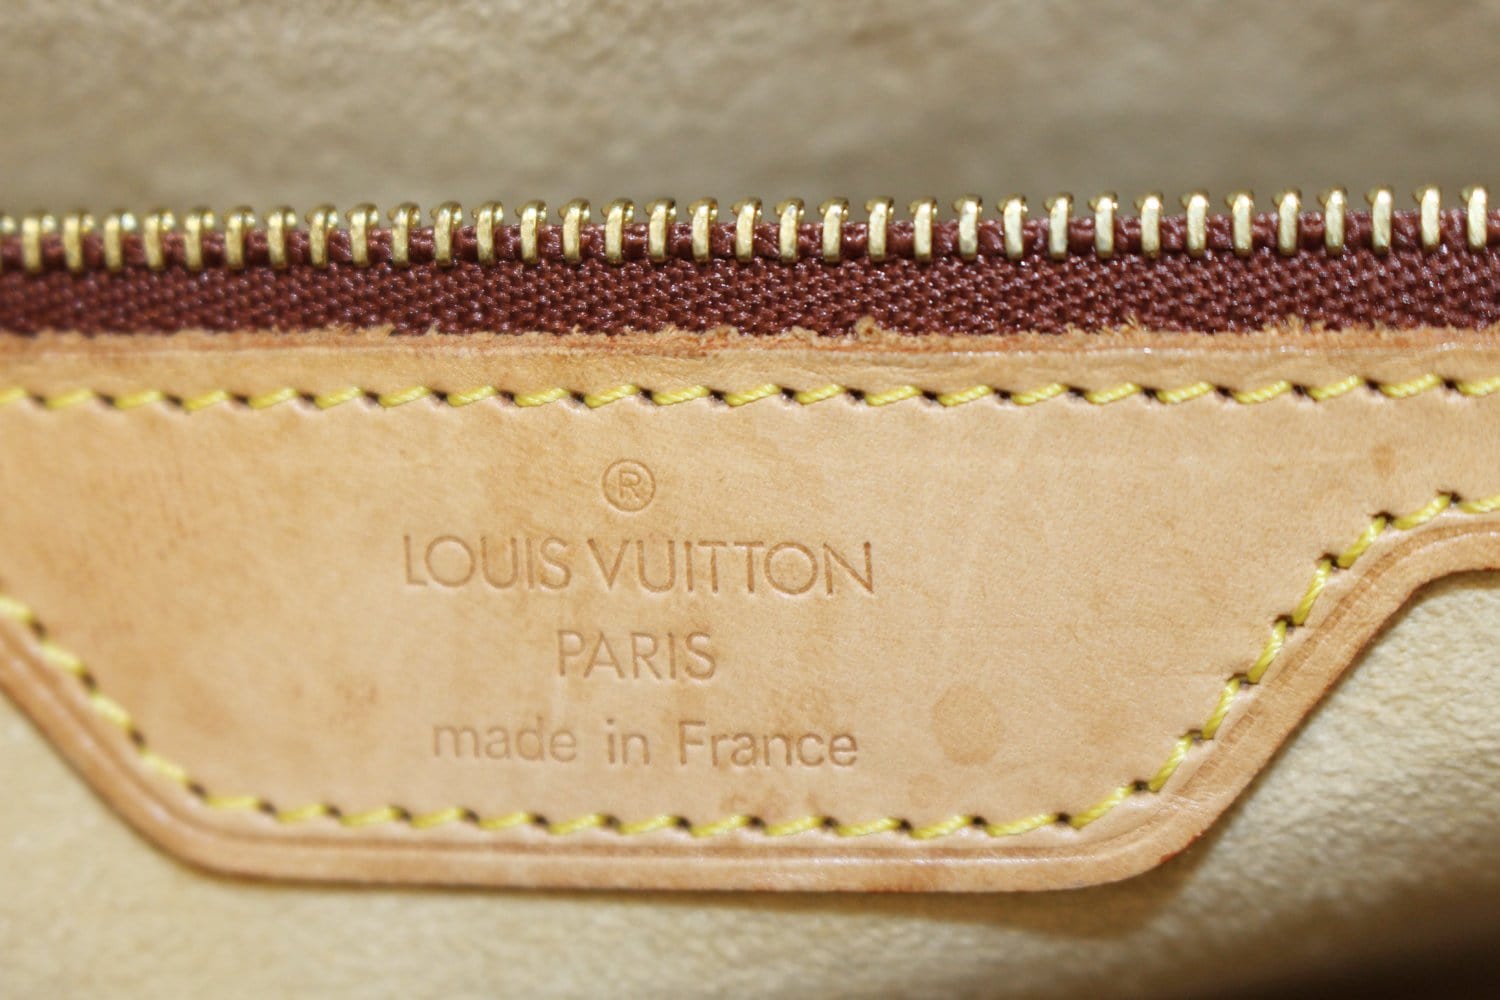 Buy Louis Vuitton Babylone Handbag Monogram Canvas Online in India